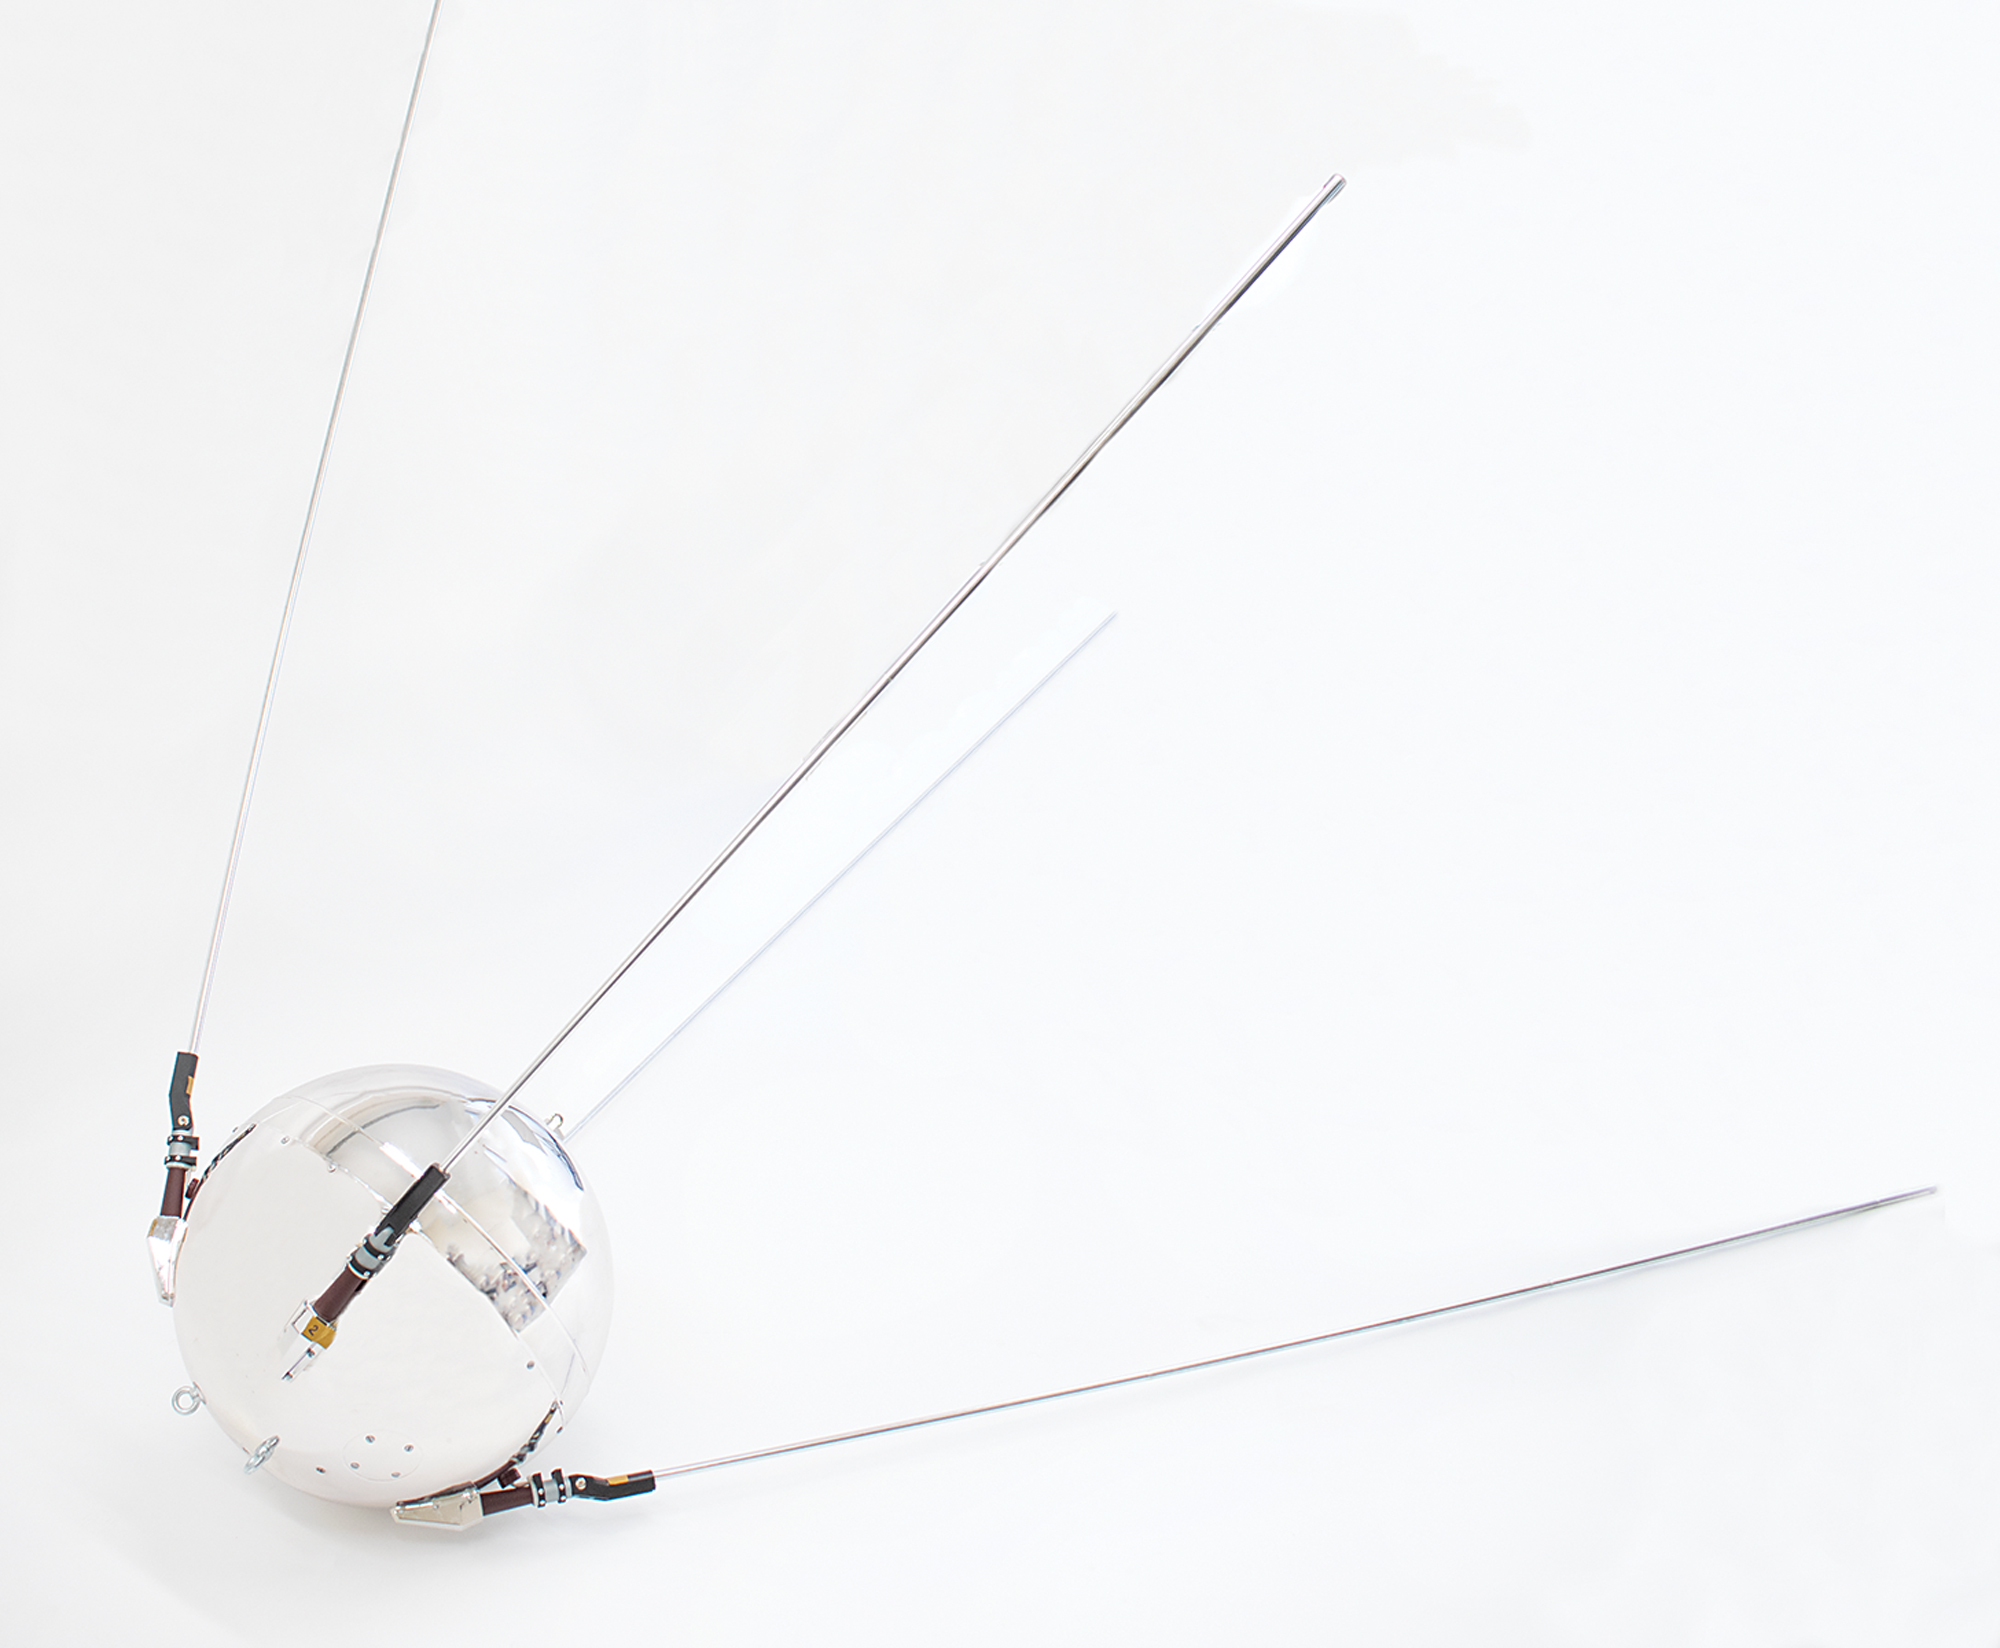 Sputnik 1 Full-Scale Model | RR Auction